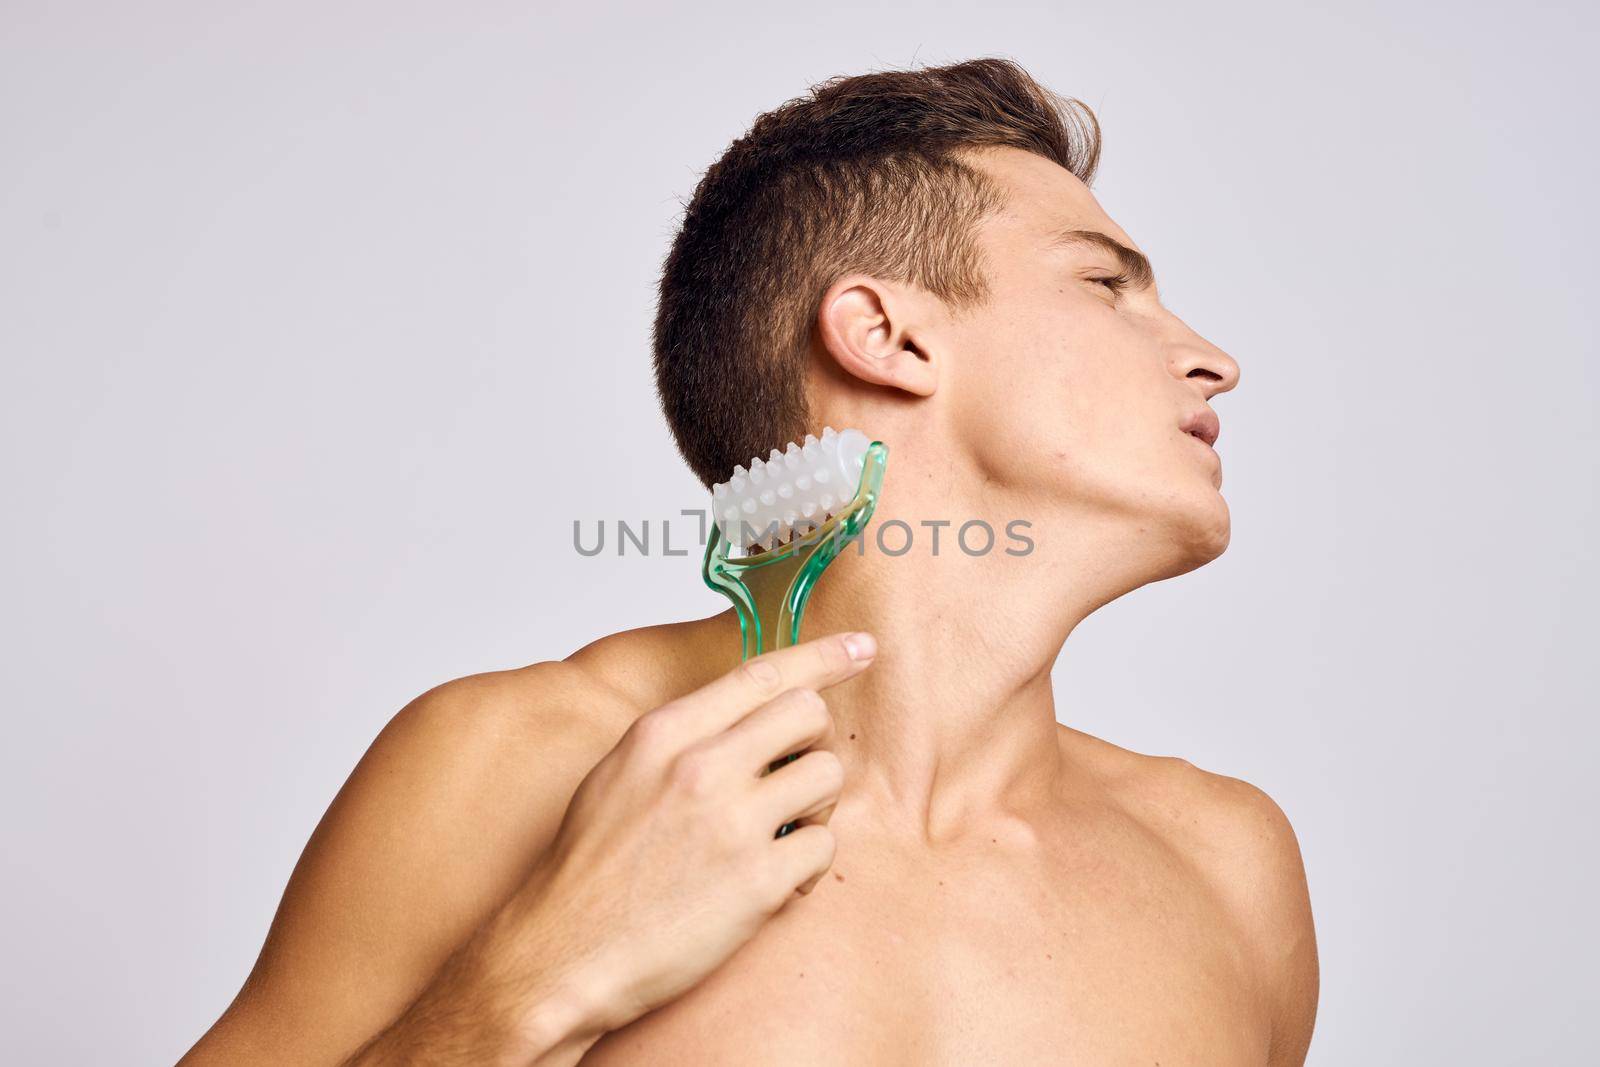 male shower naked shoulders skin care hygiene care by SHOTPRIME